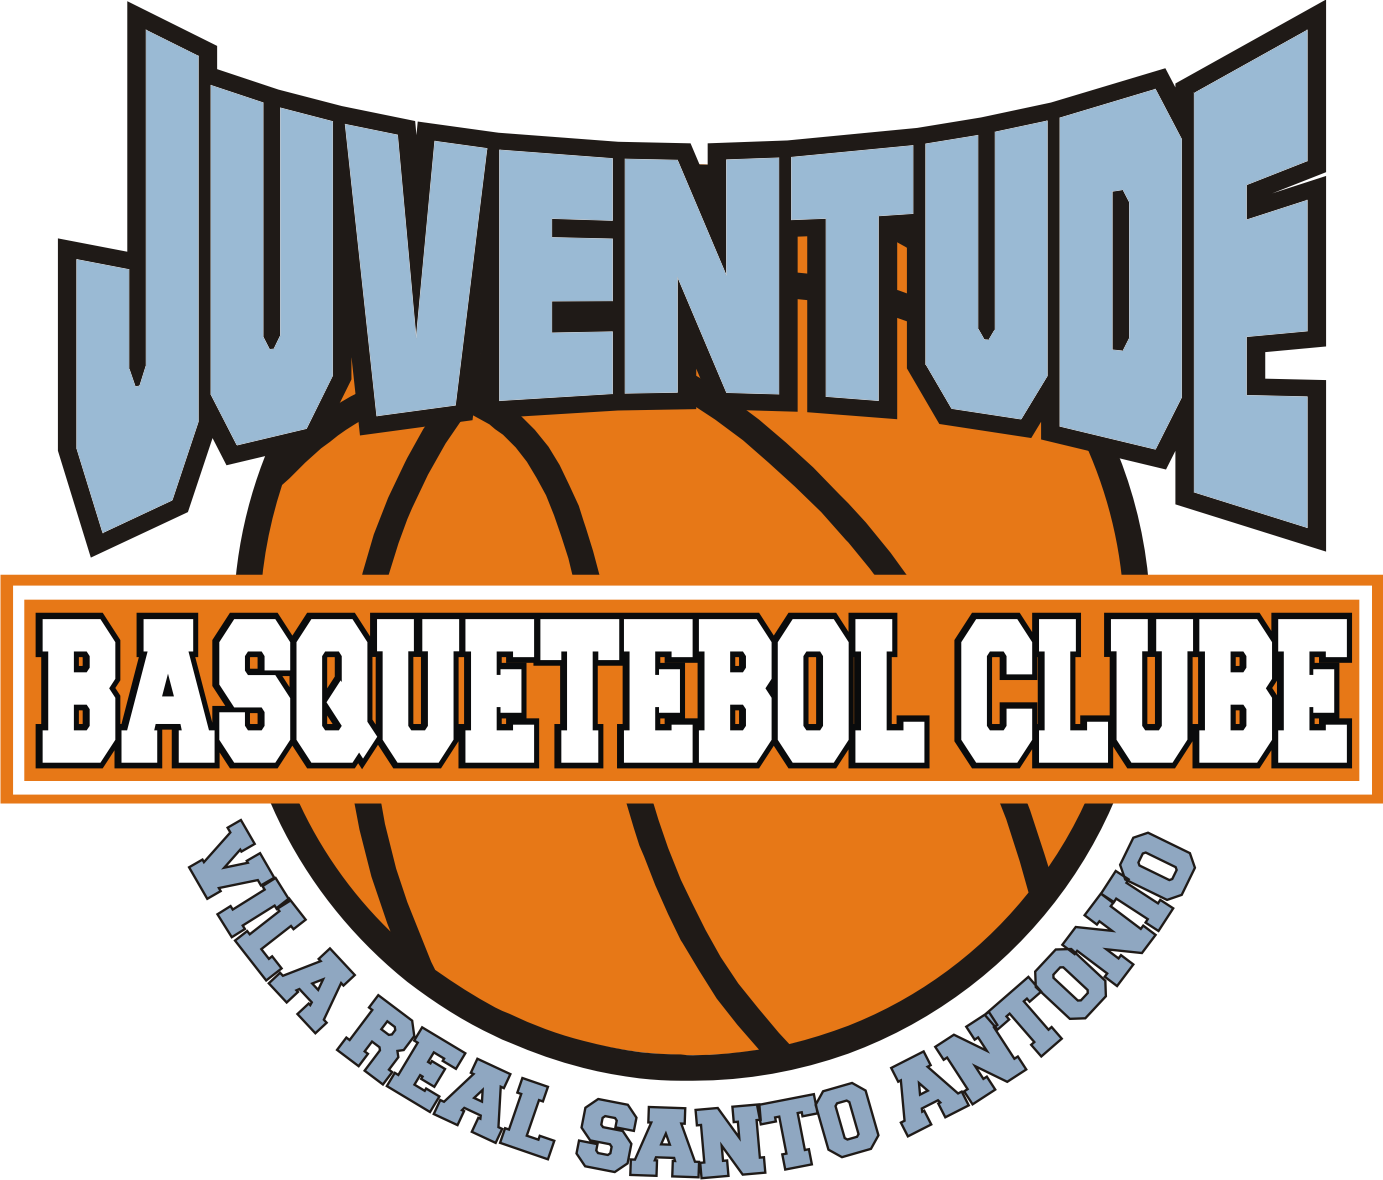 Juventude Basquetebol Clube